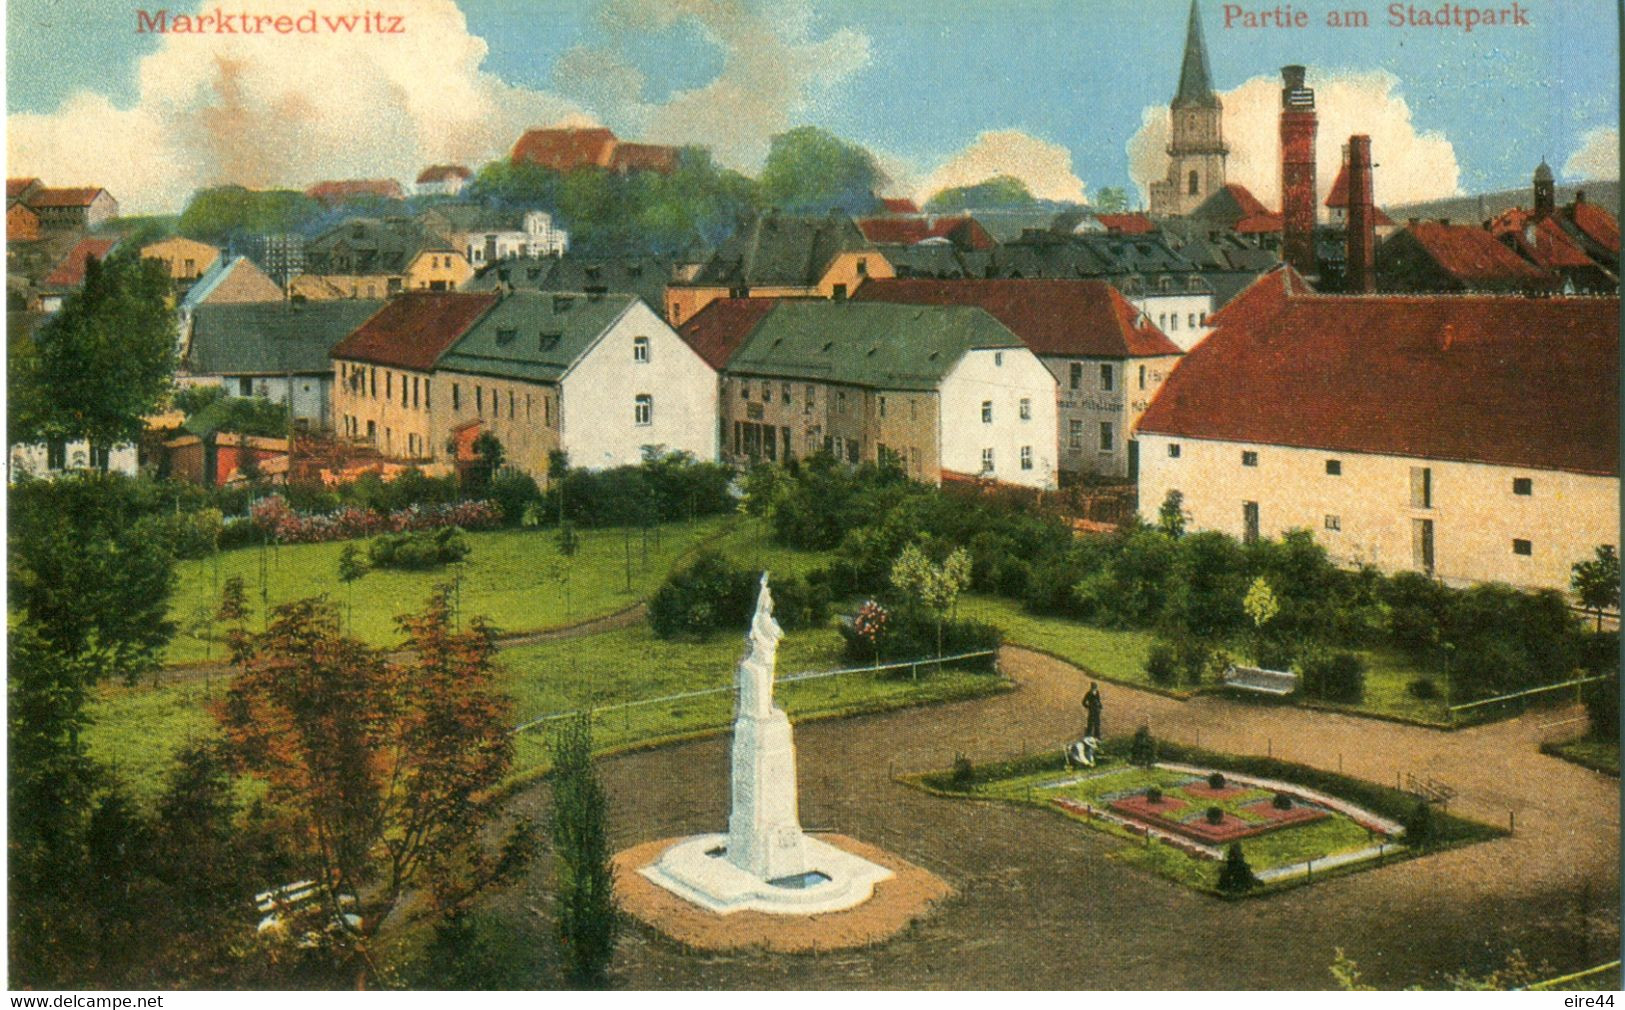 Germany Booklet 8 postcards City Marktredwitz Bavaria 1900 - 1910 Mint sole sale department